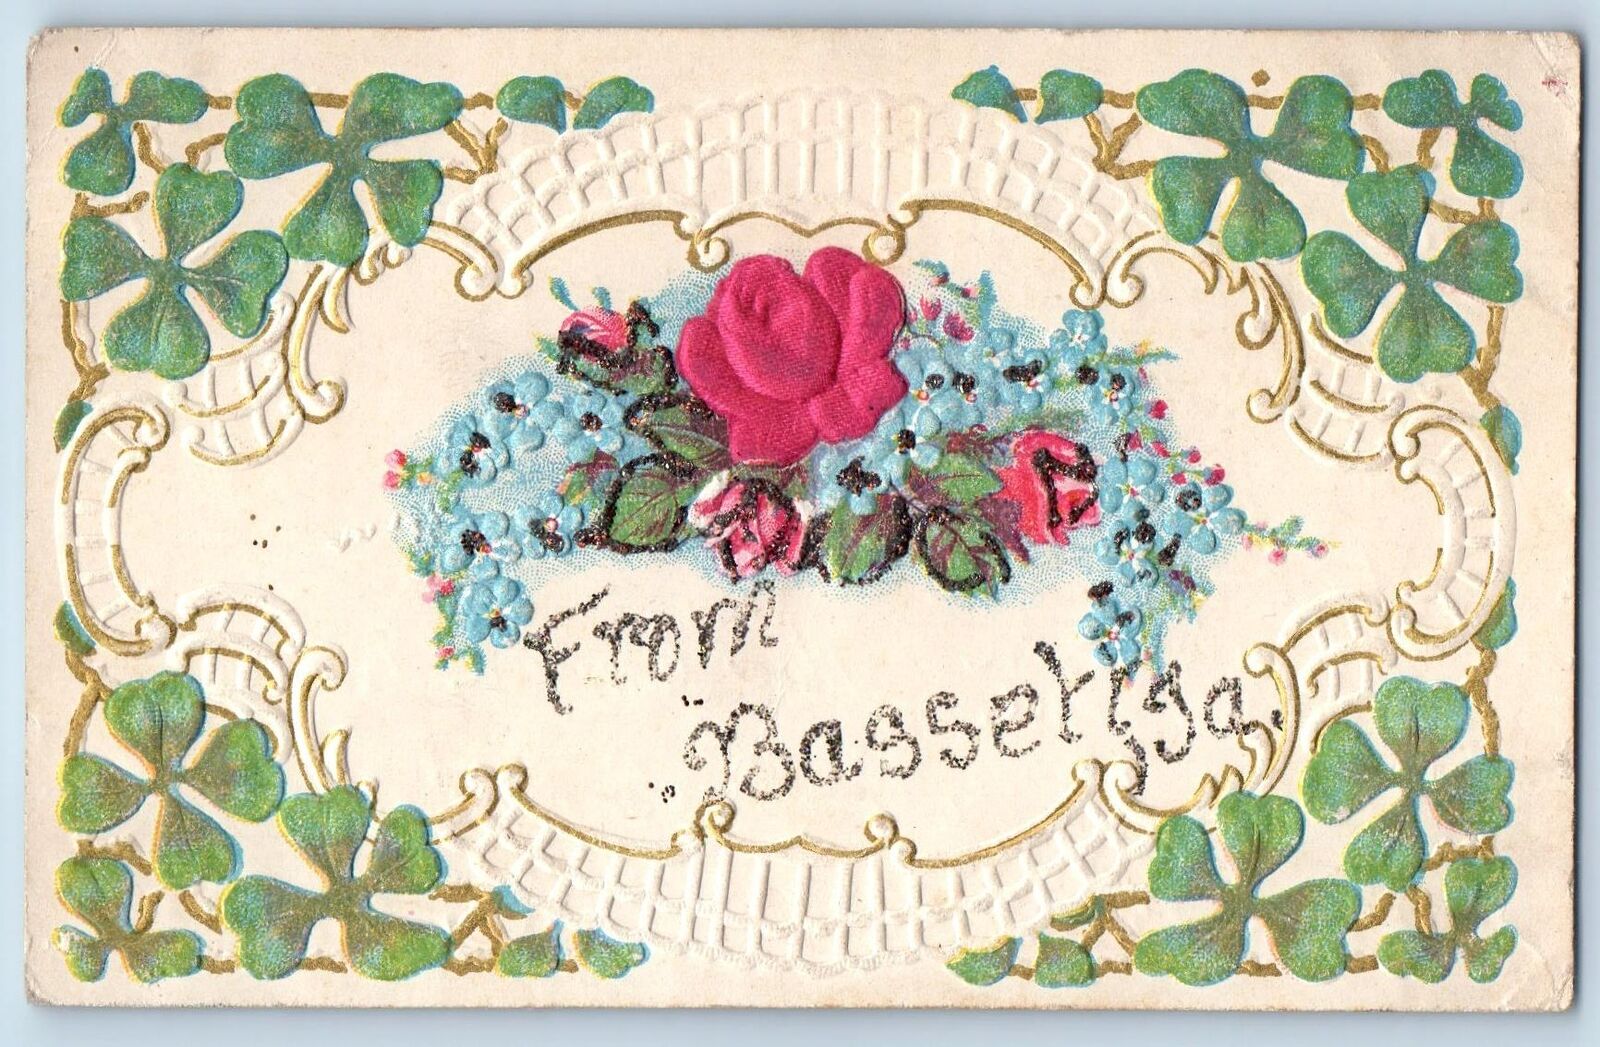 Bassett Iowa IA Postcard Greetings Embossed Flowers And Clover Leaves c1910's